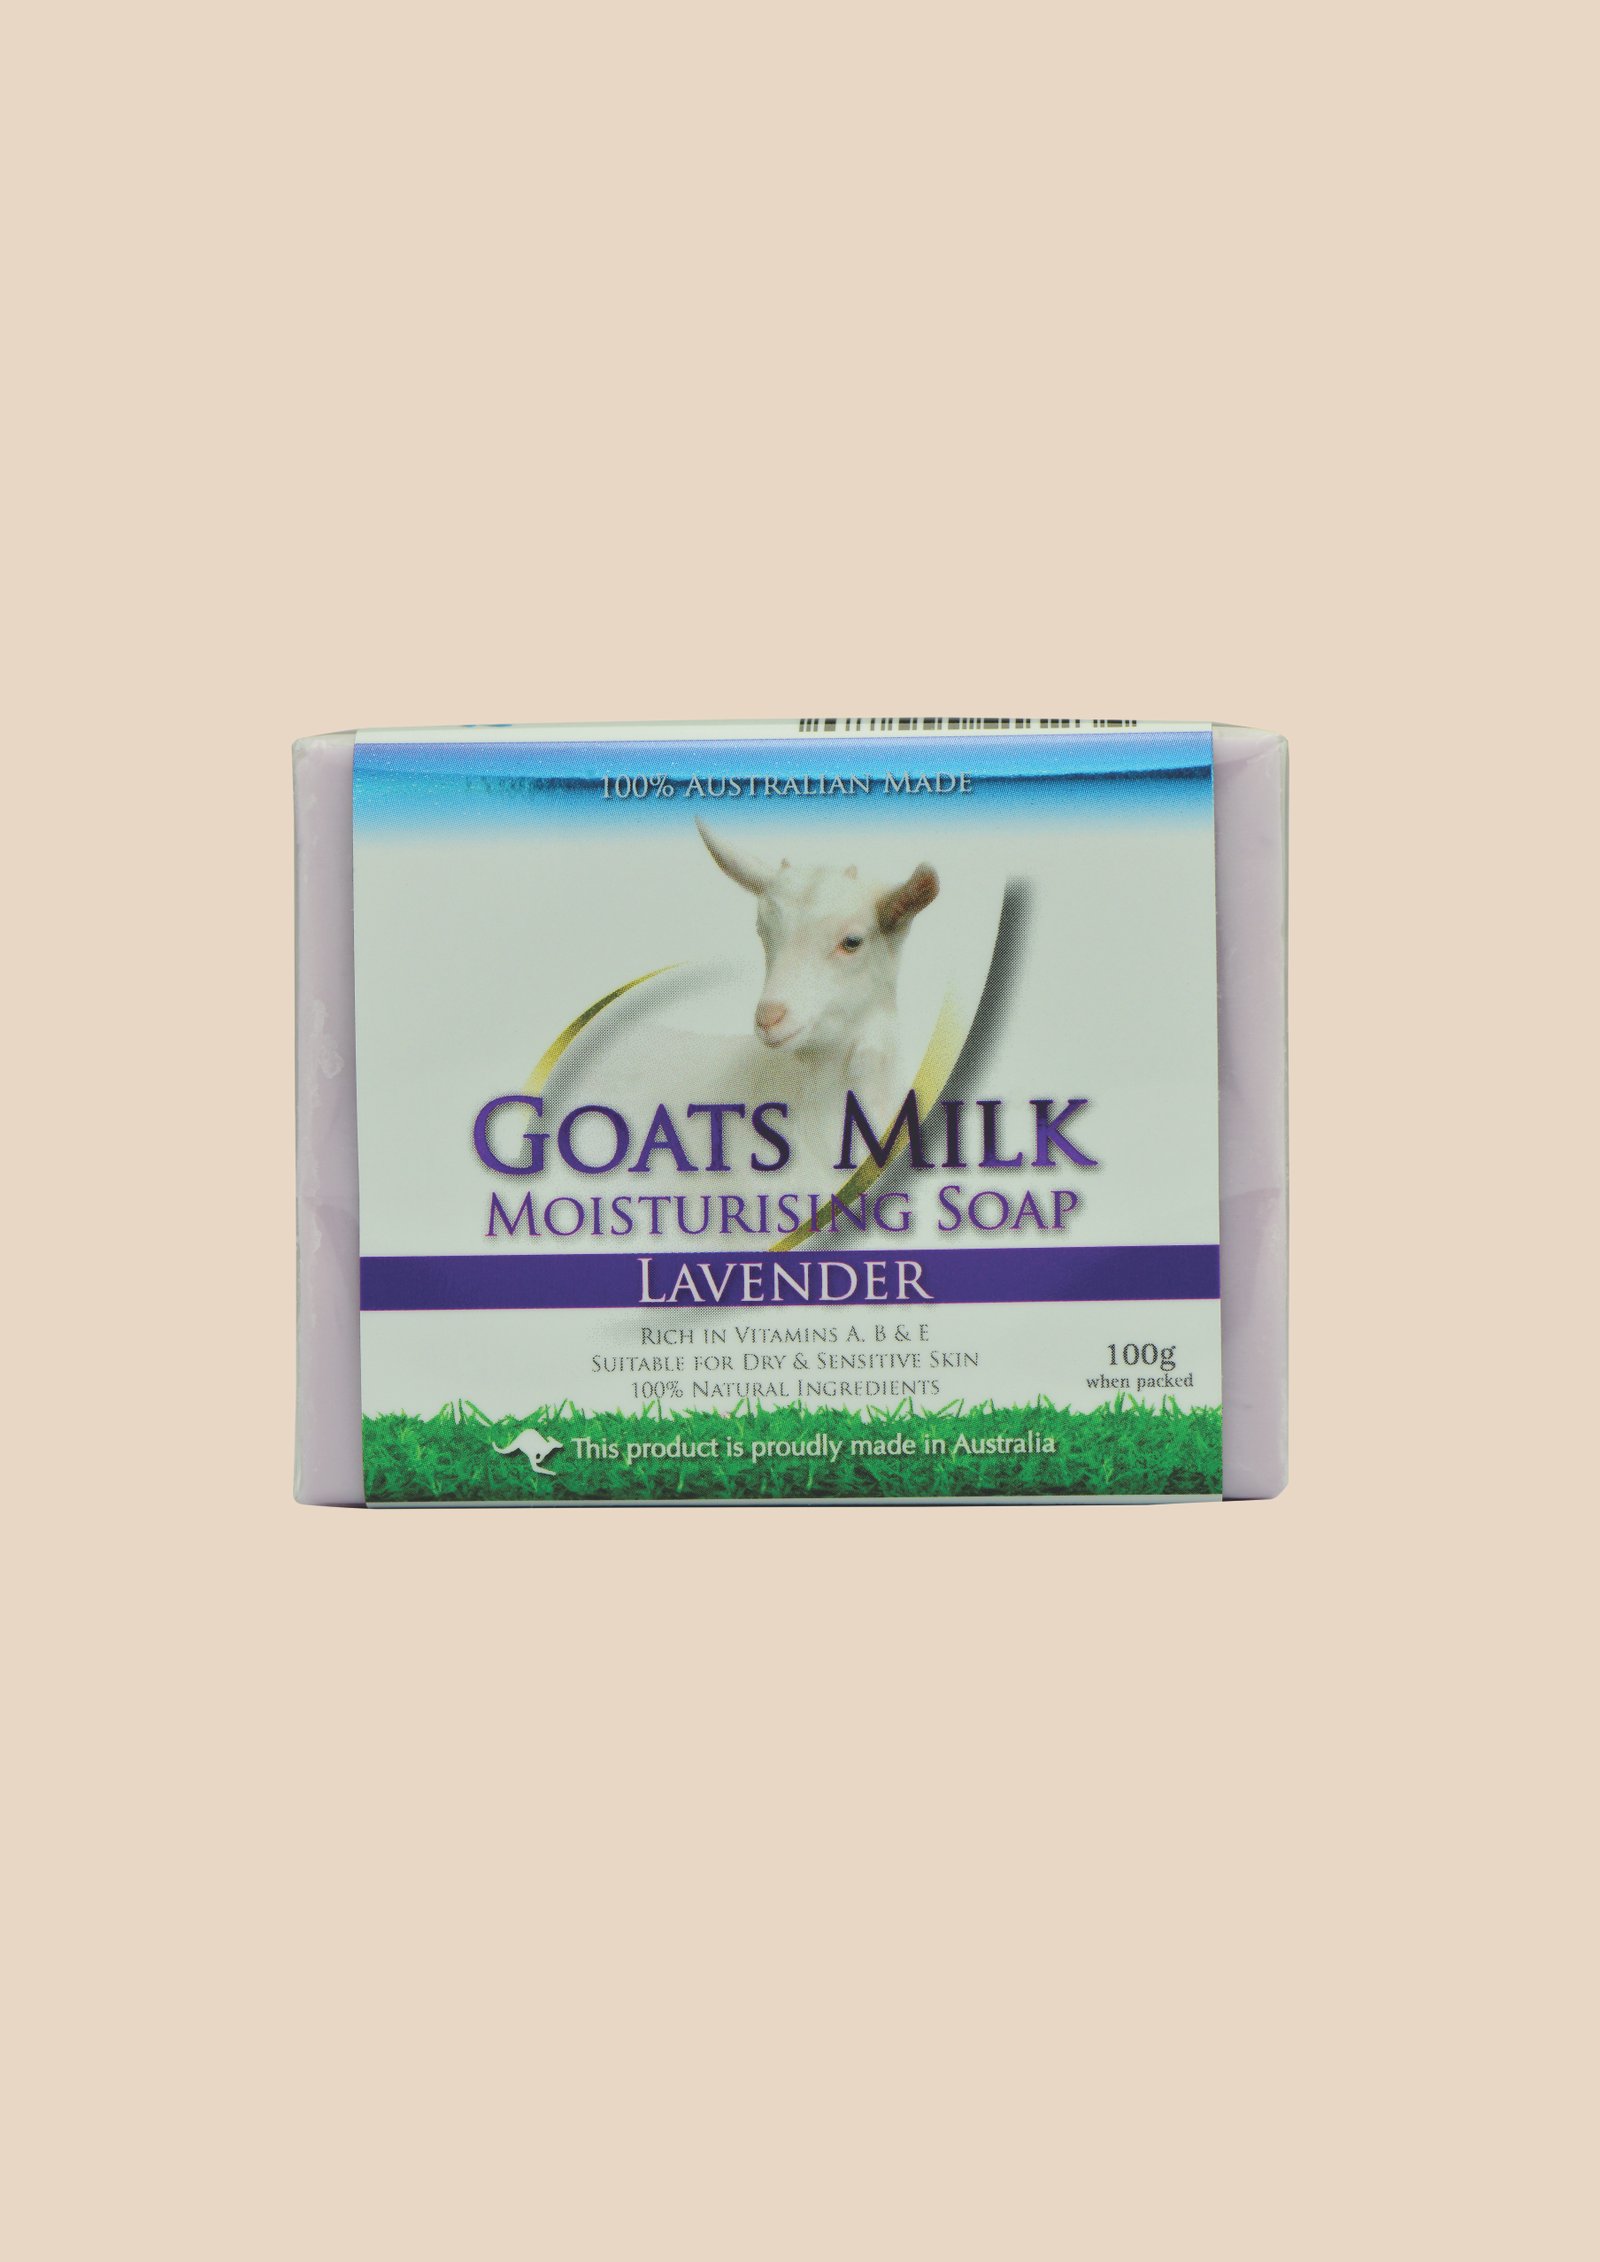 Goats Milk with Lavender Moisturising Soap